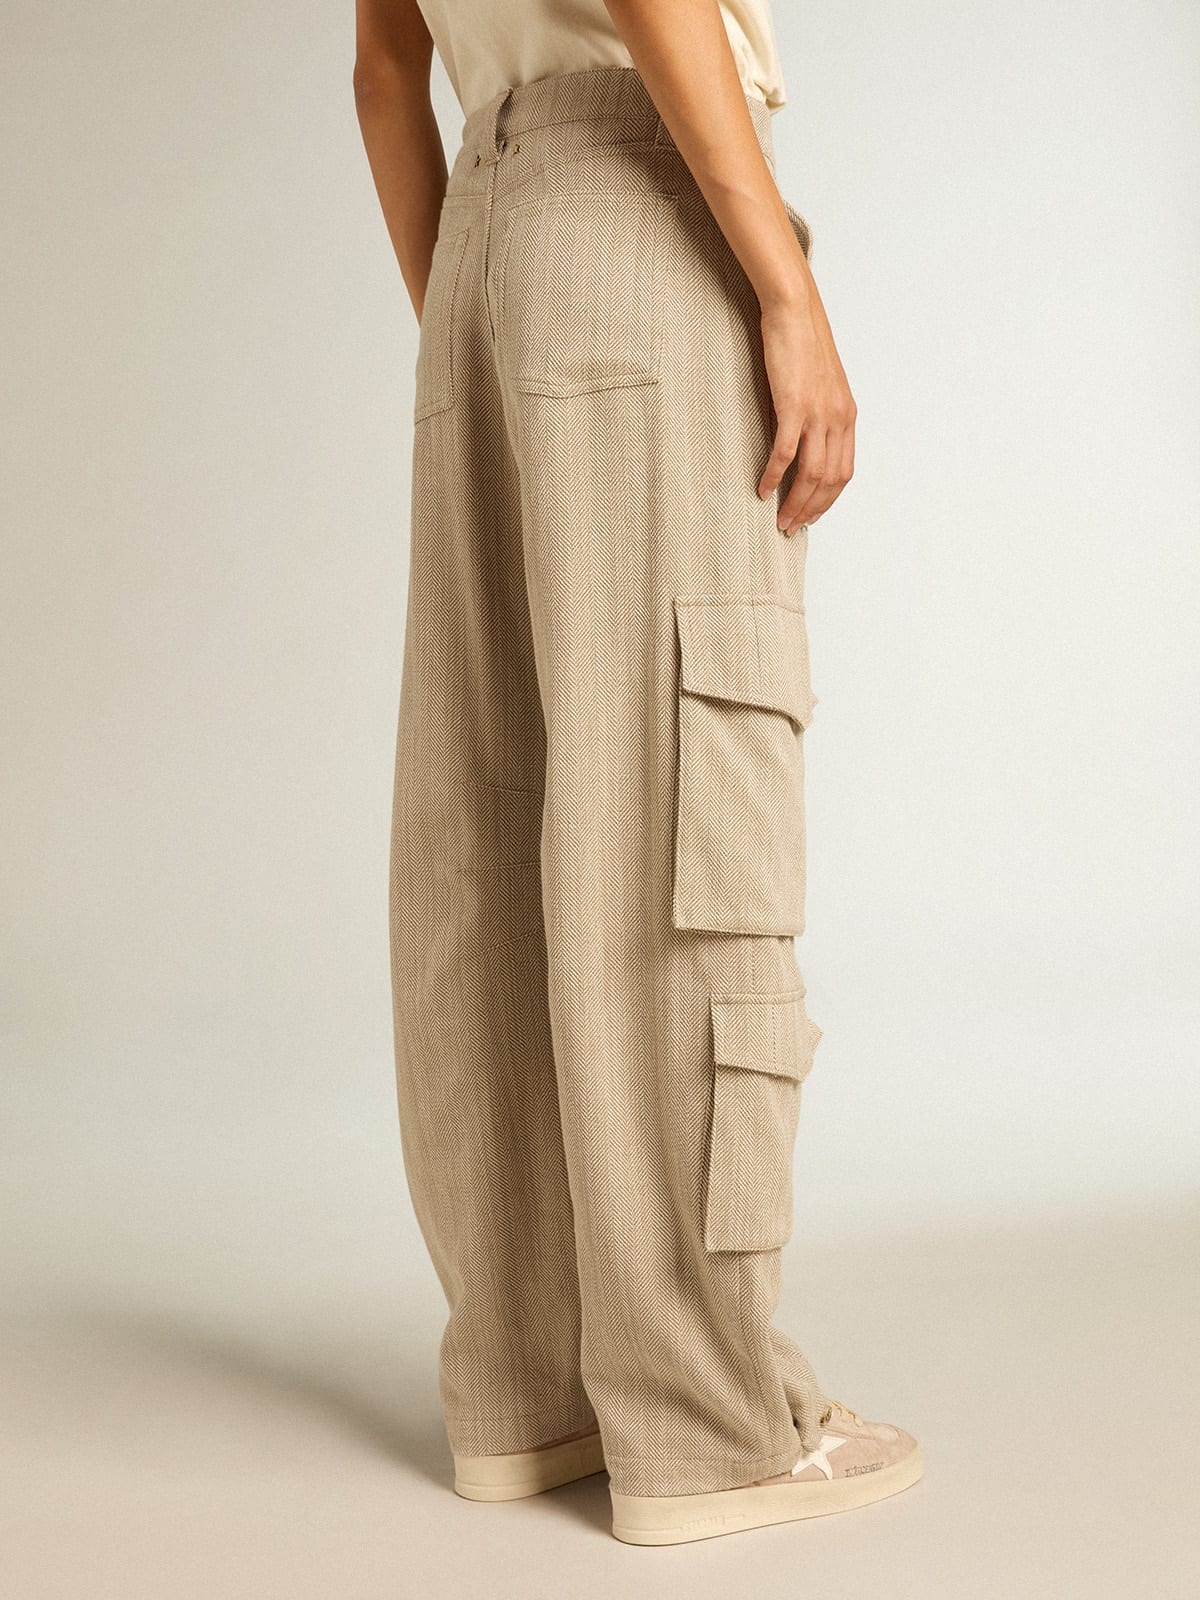 Women's dark olive-colored cotton cargo pants with a herringbone design - 4